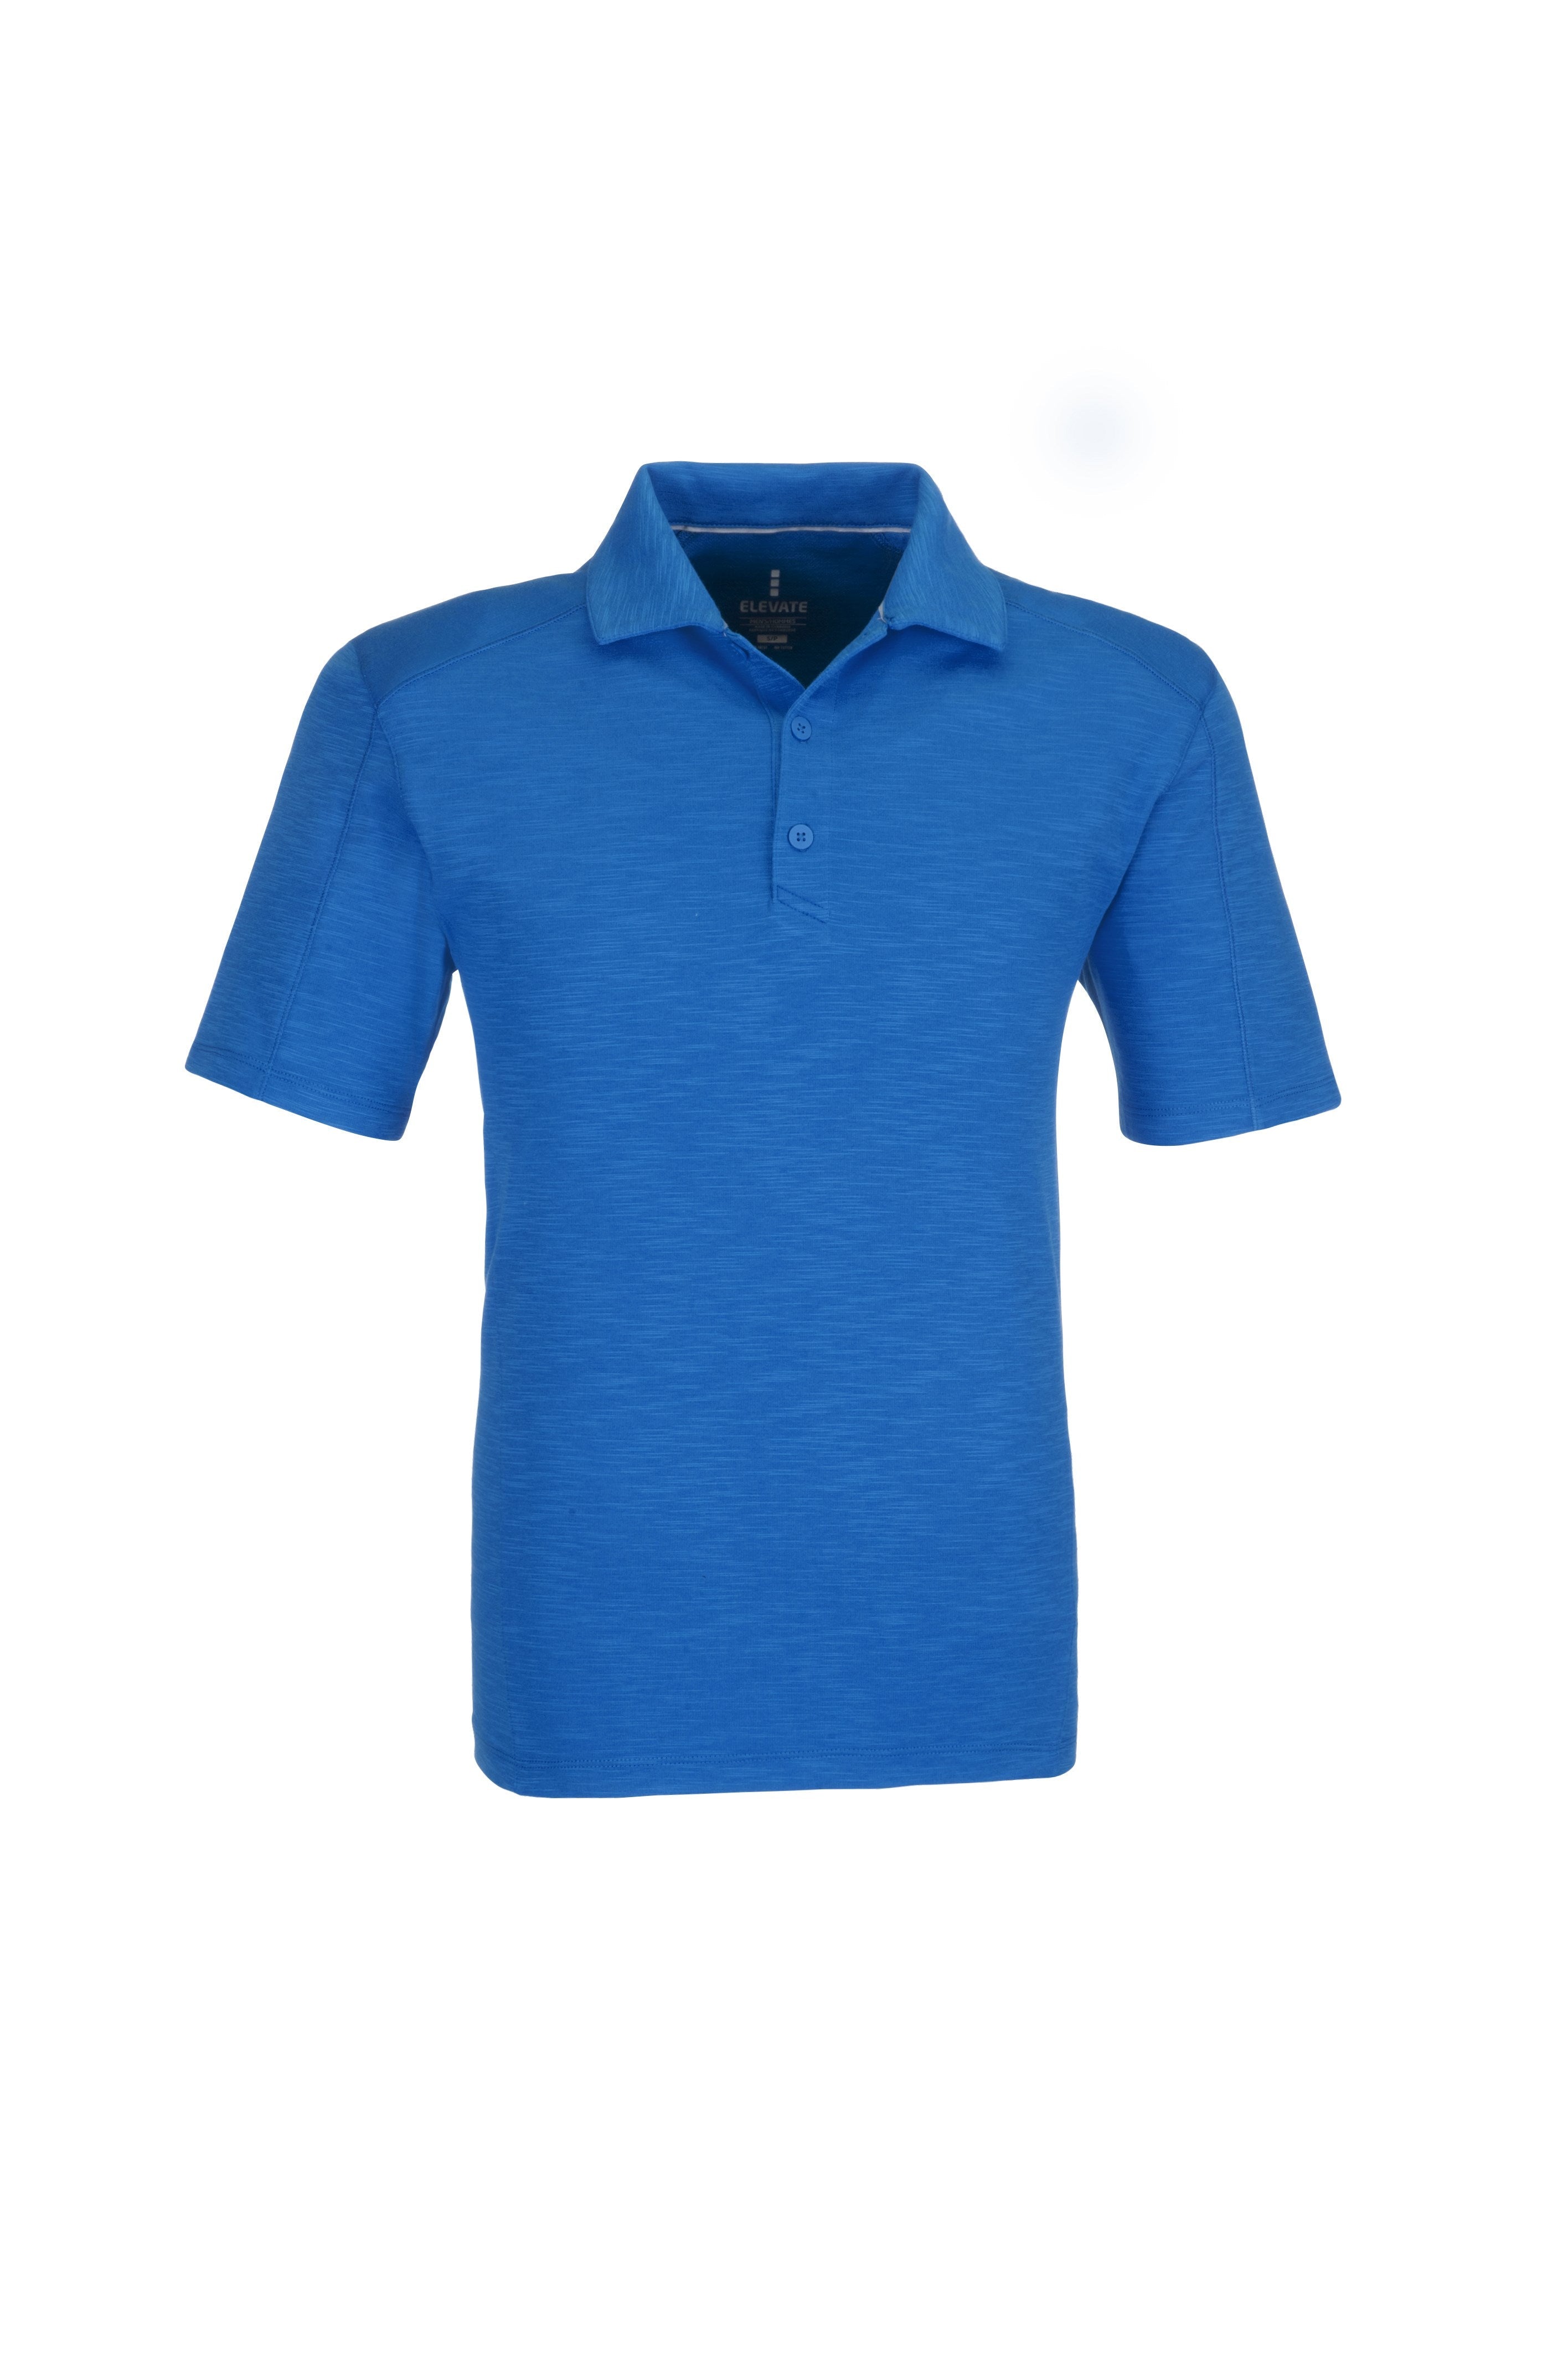 Mens Jepson Golf Shirt - Grey Only-L-Blue-BU